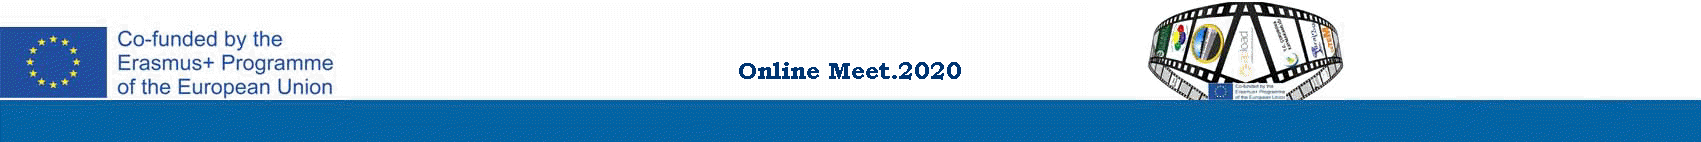 Online Meet.2020